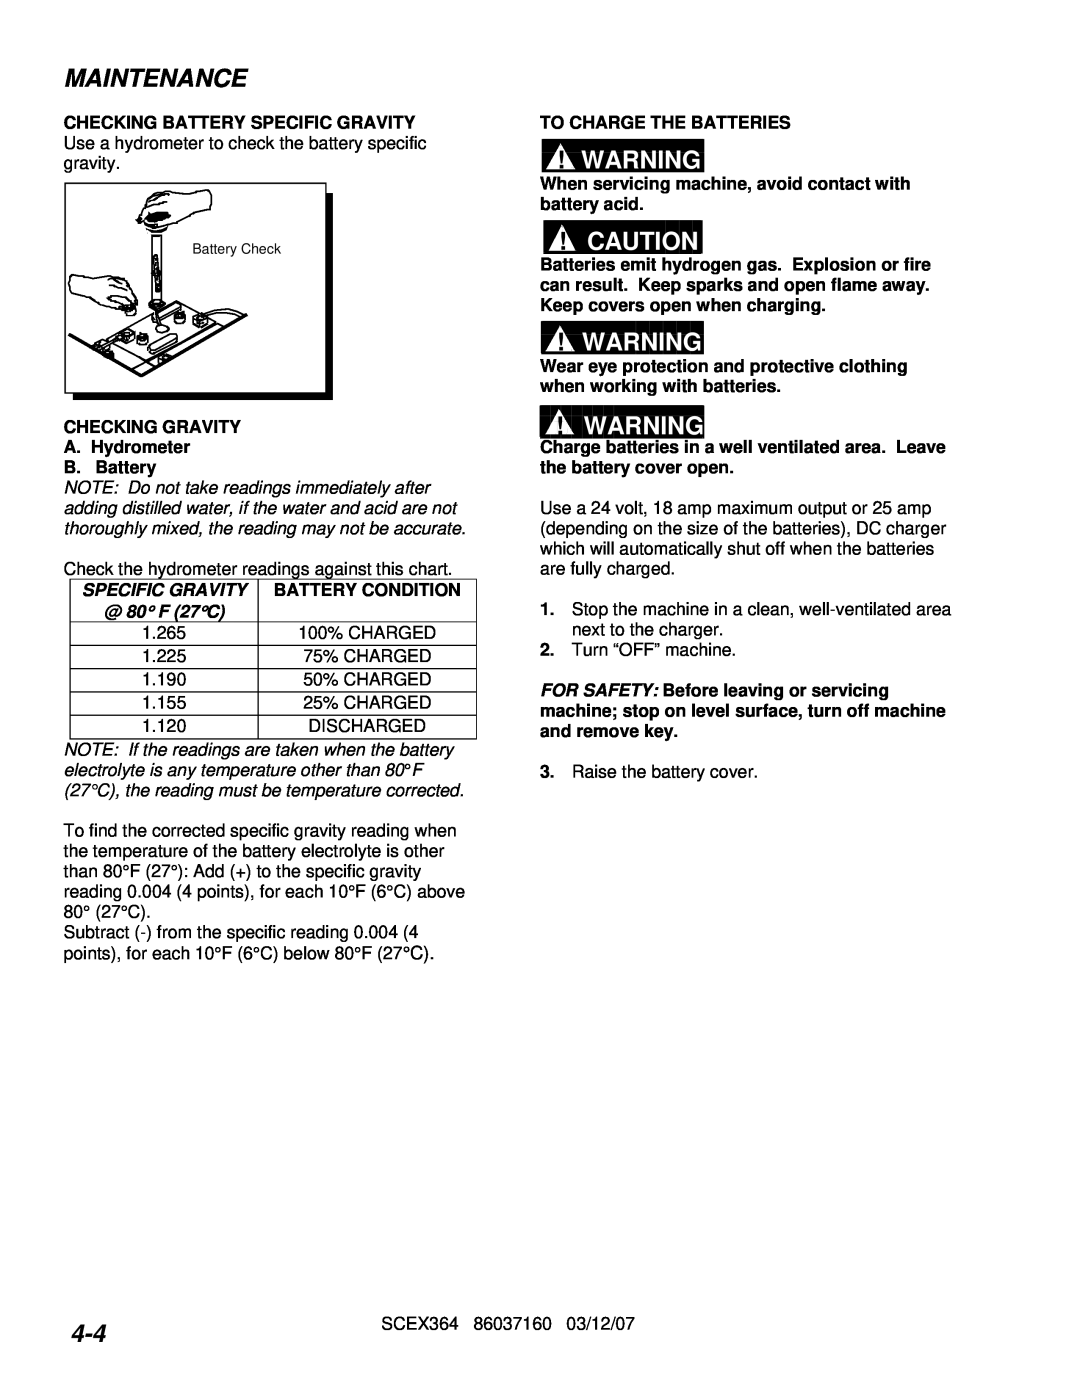 Windsor SCEX364, 10052350 manuel dutilisation Maintenance, Specific Gravity, @ 80 F 27C 